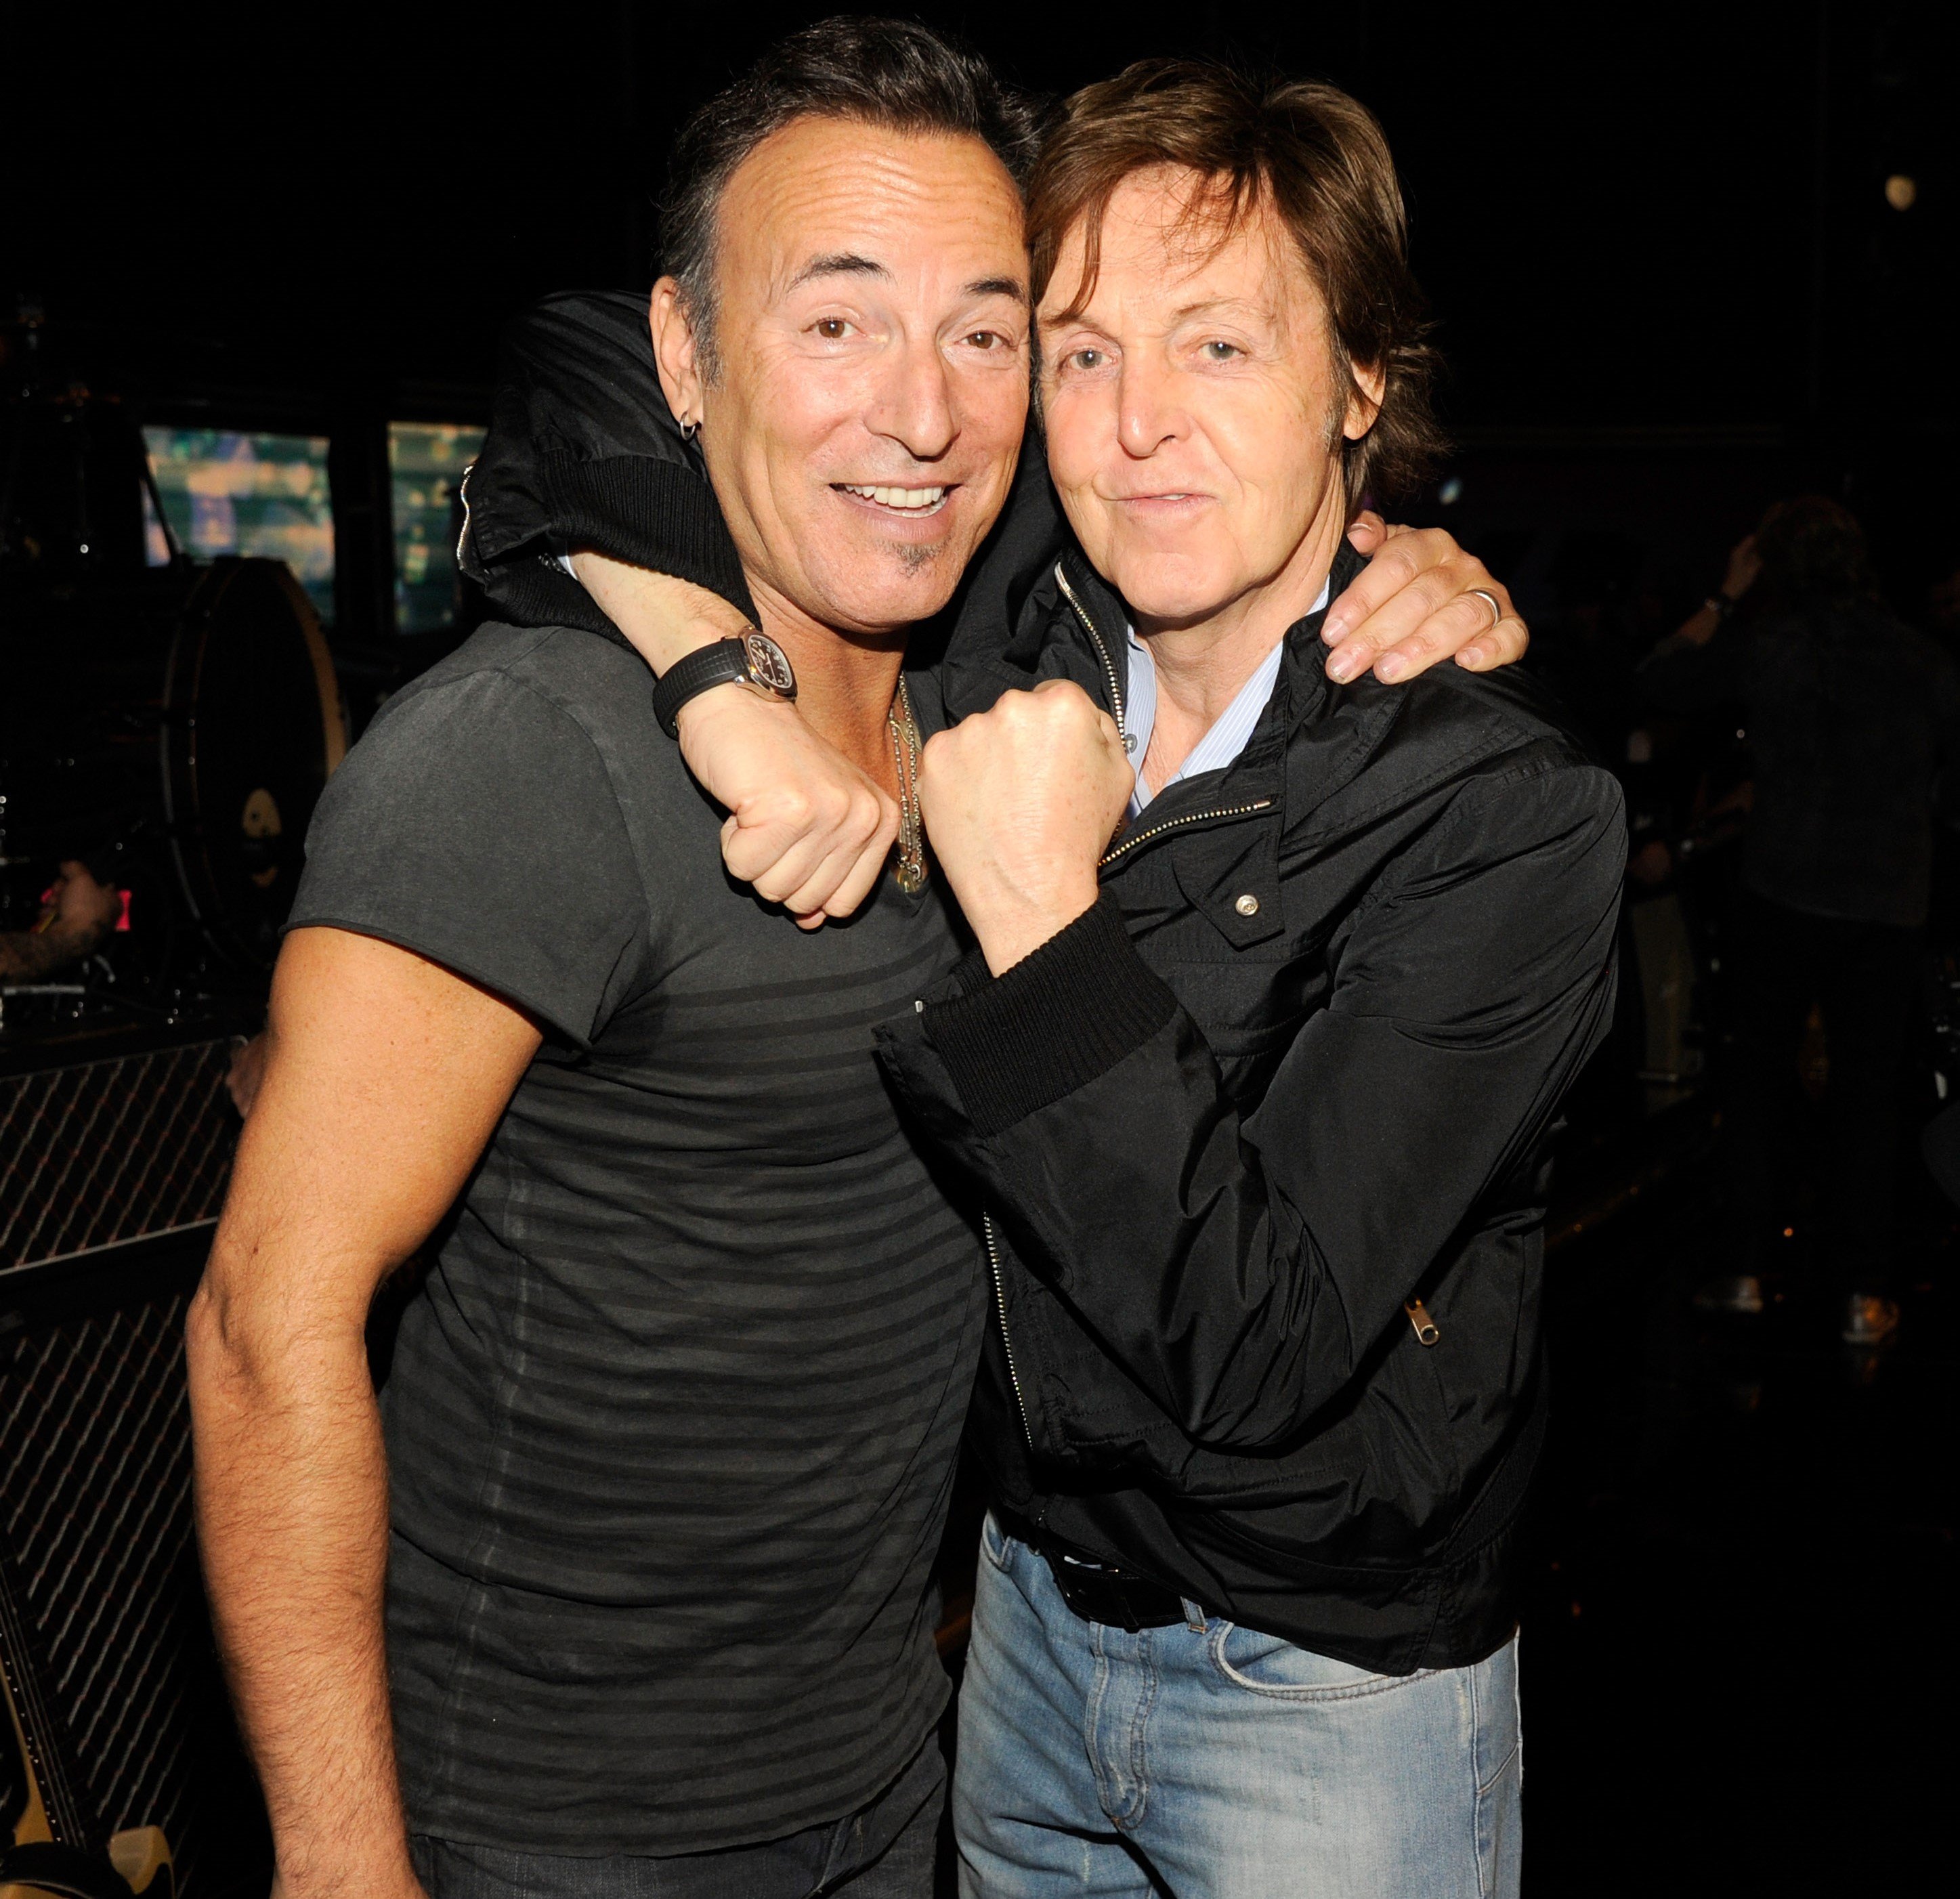 Bruce Springsteen and Paul McCartney wearing black